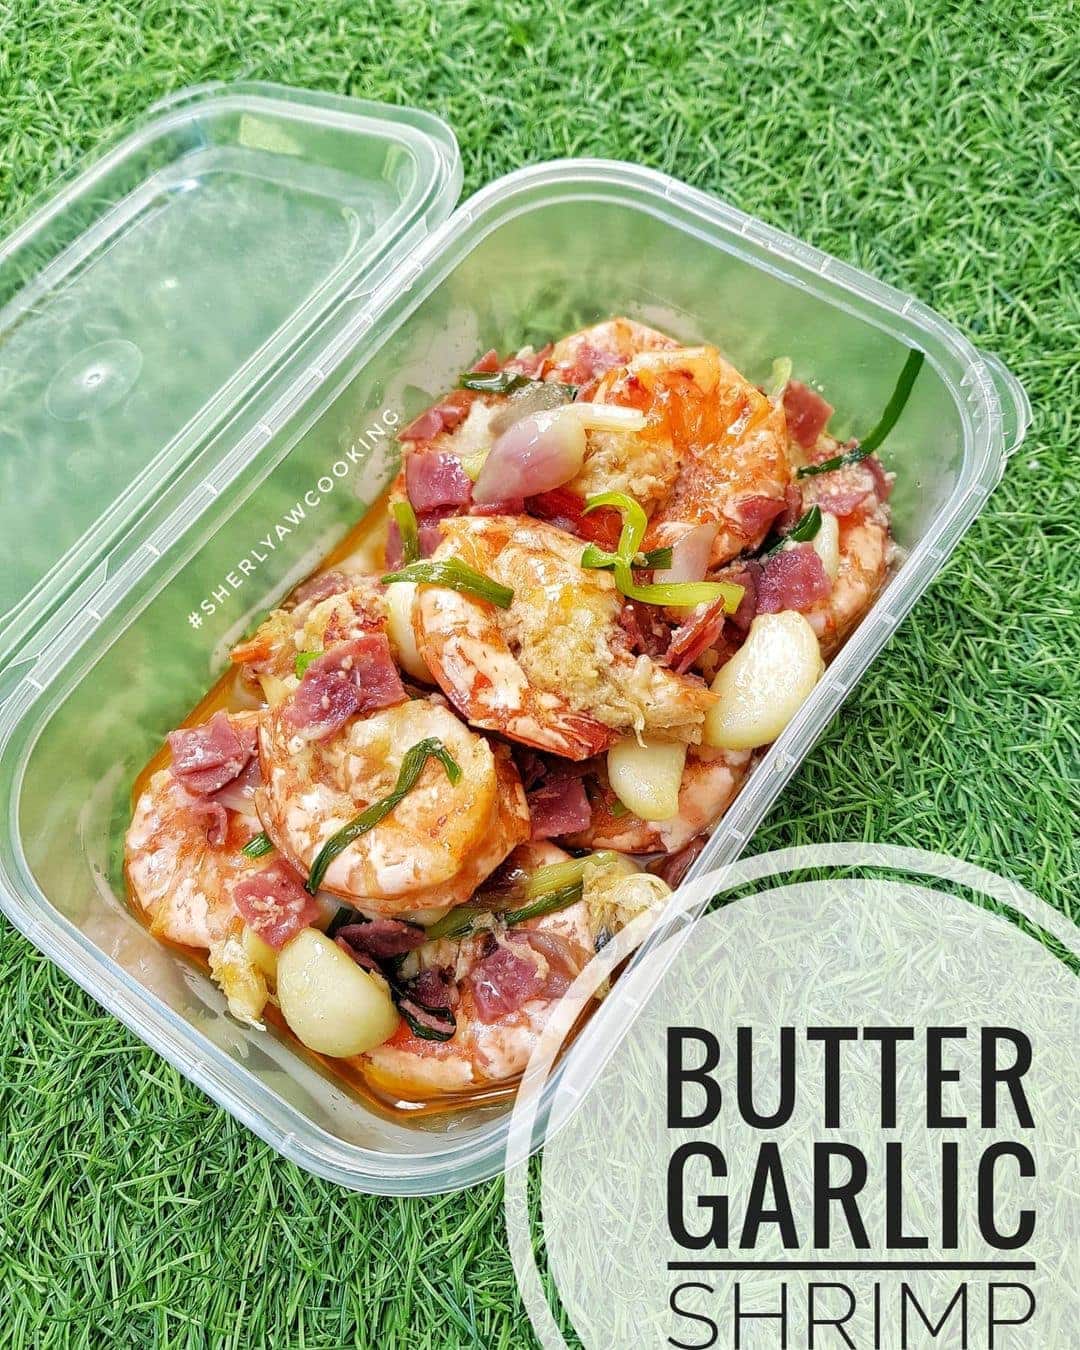 Udang mentega garlic butter shrimp dalam container